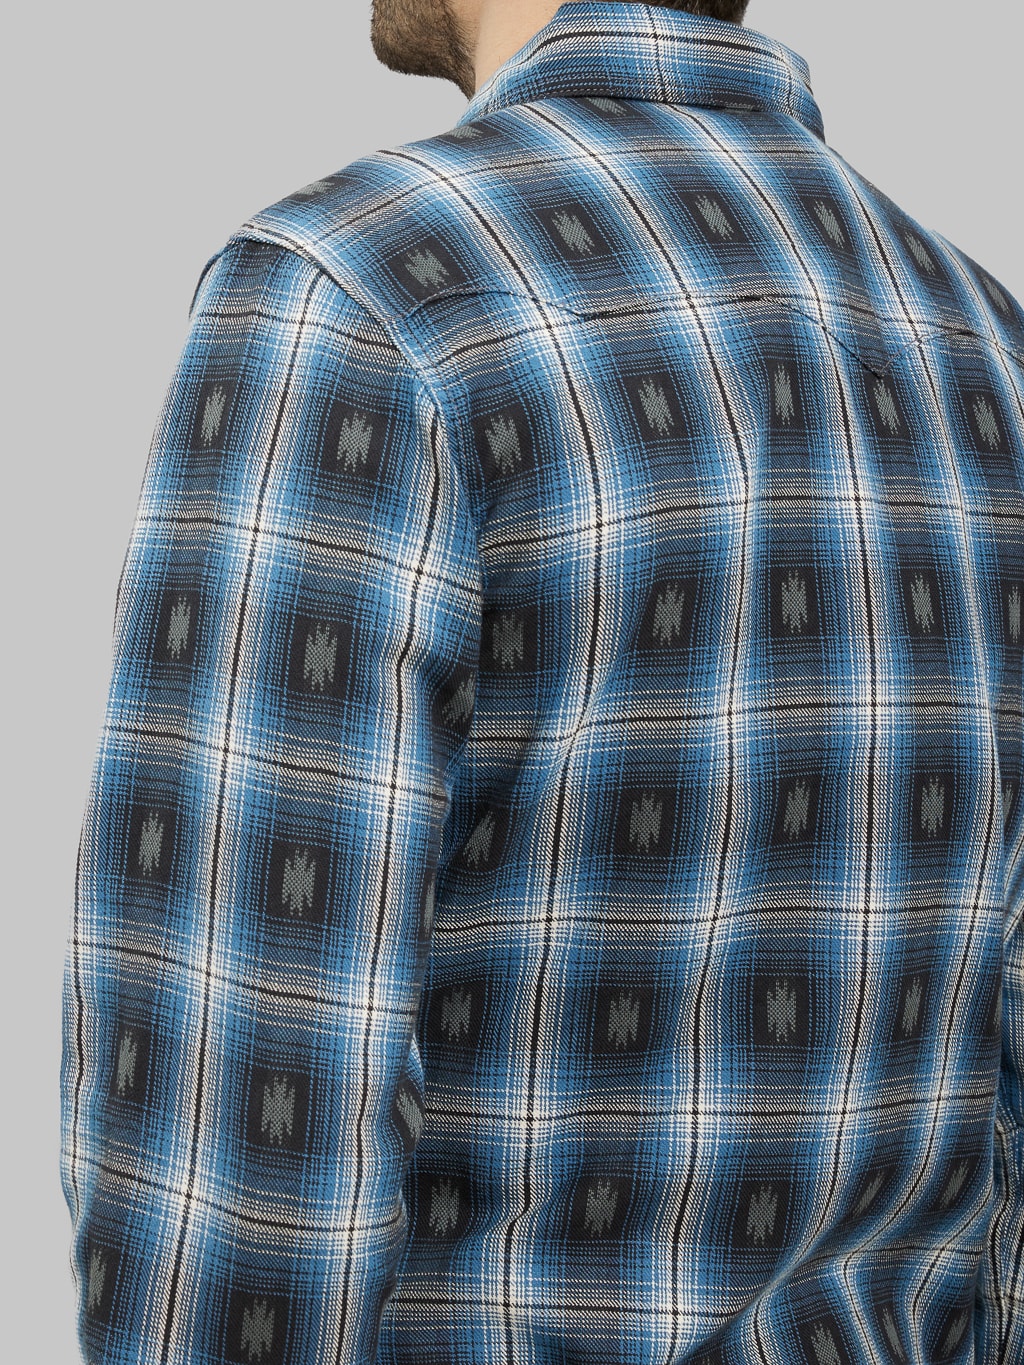 The Flat Head Native Check Western Shirt blue back details